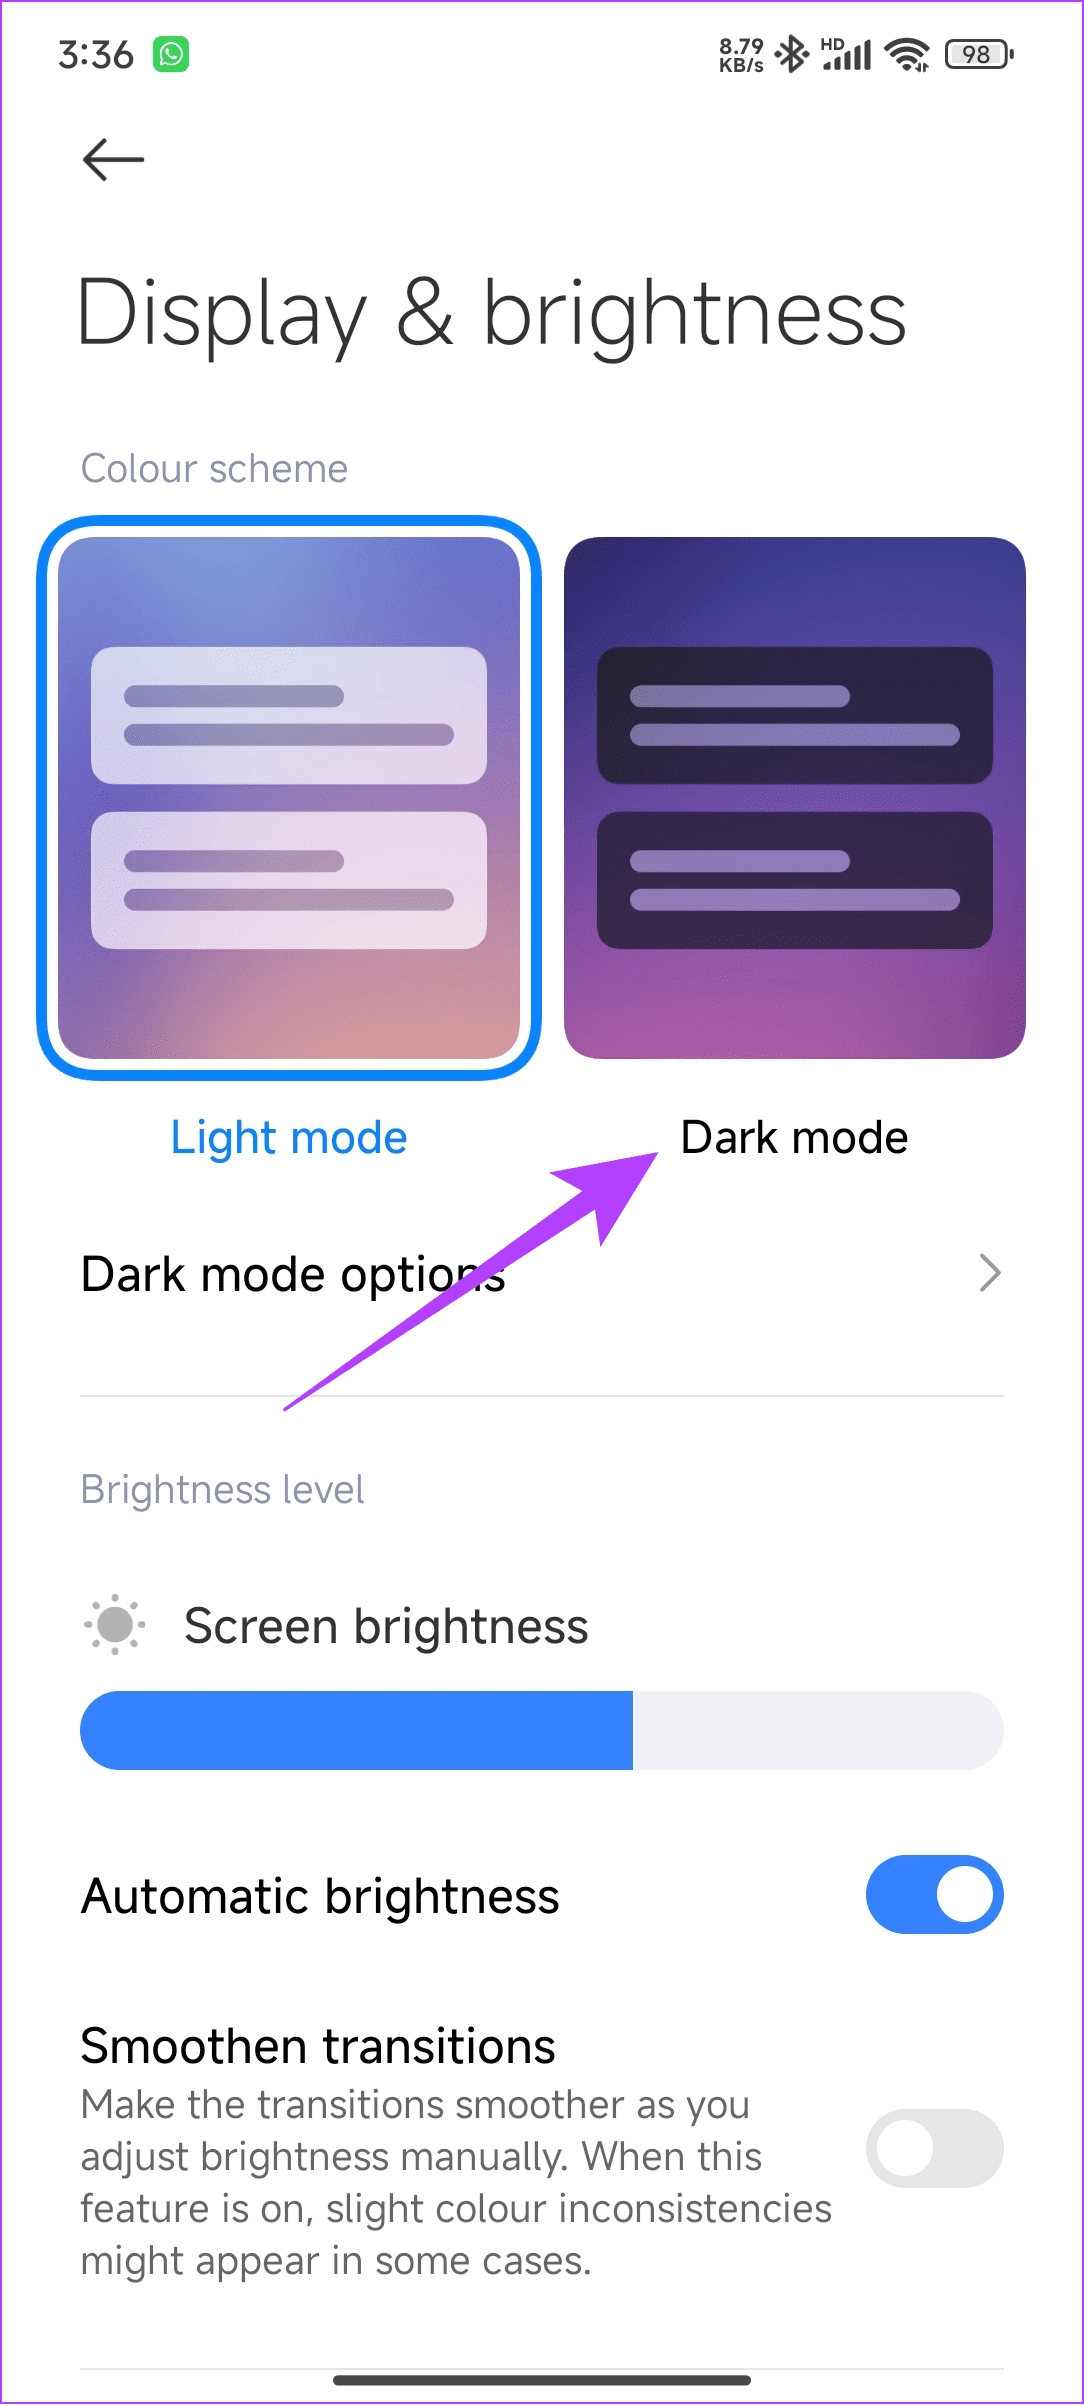 Choose dark mode